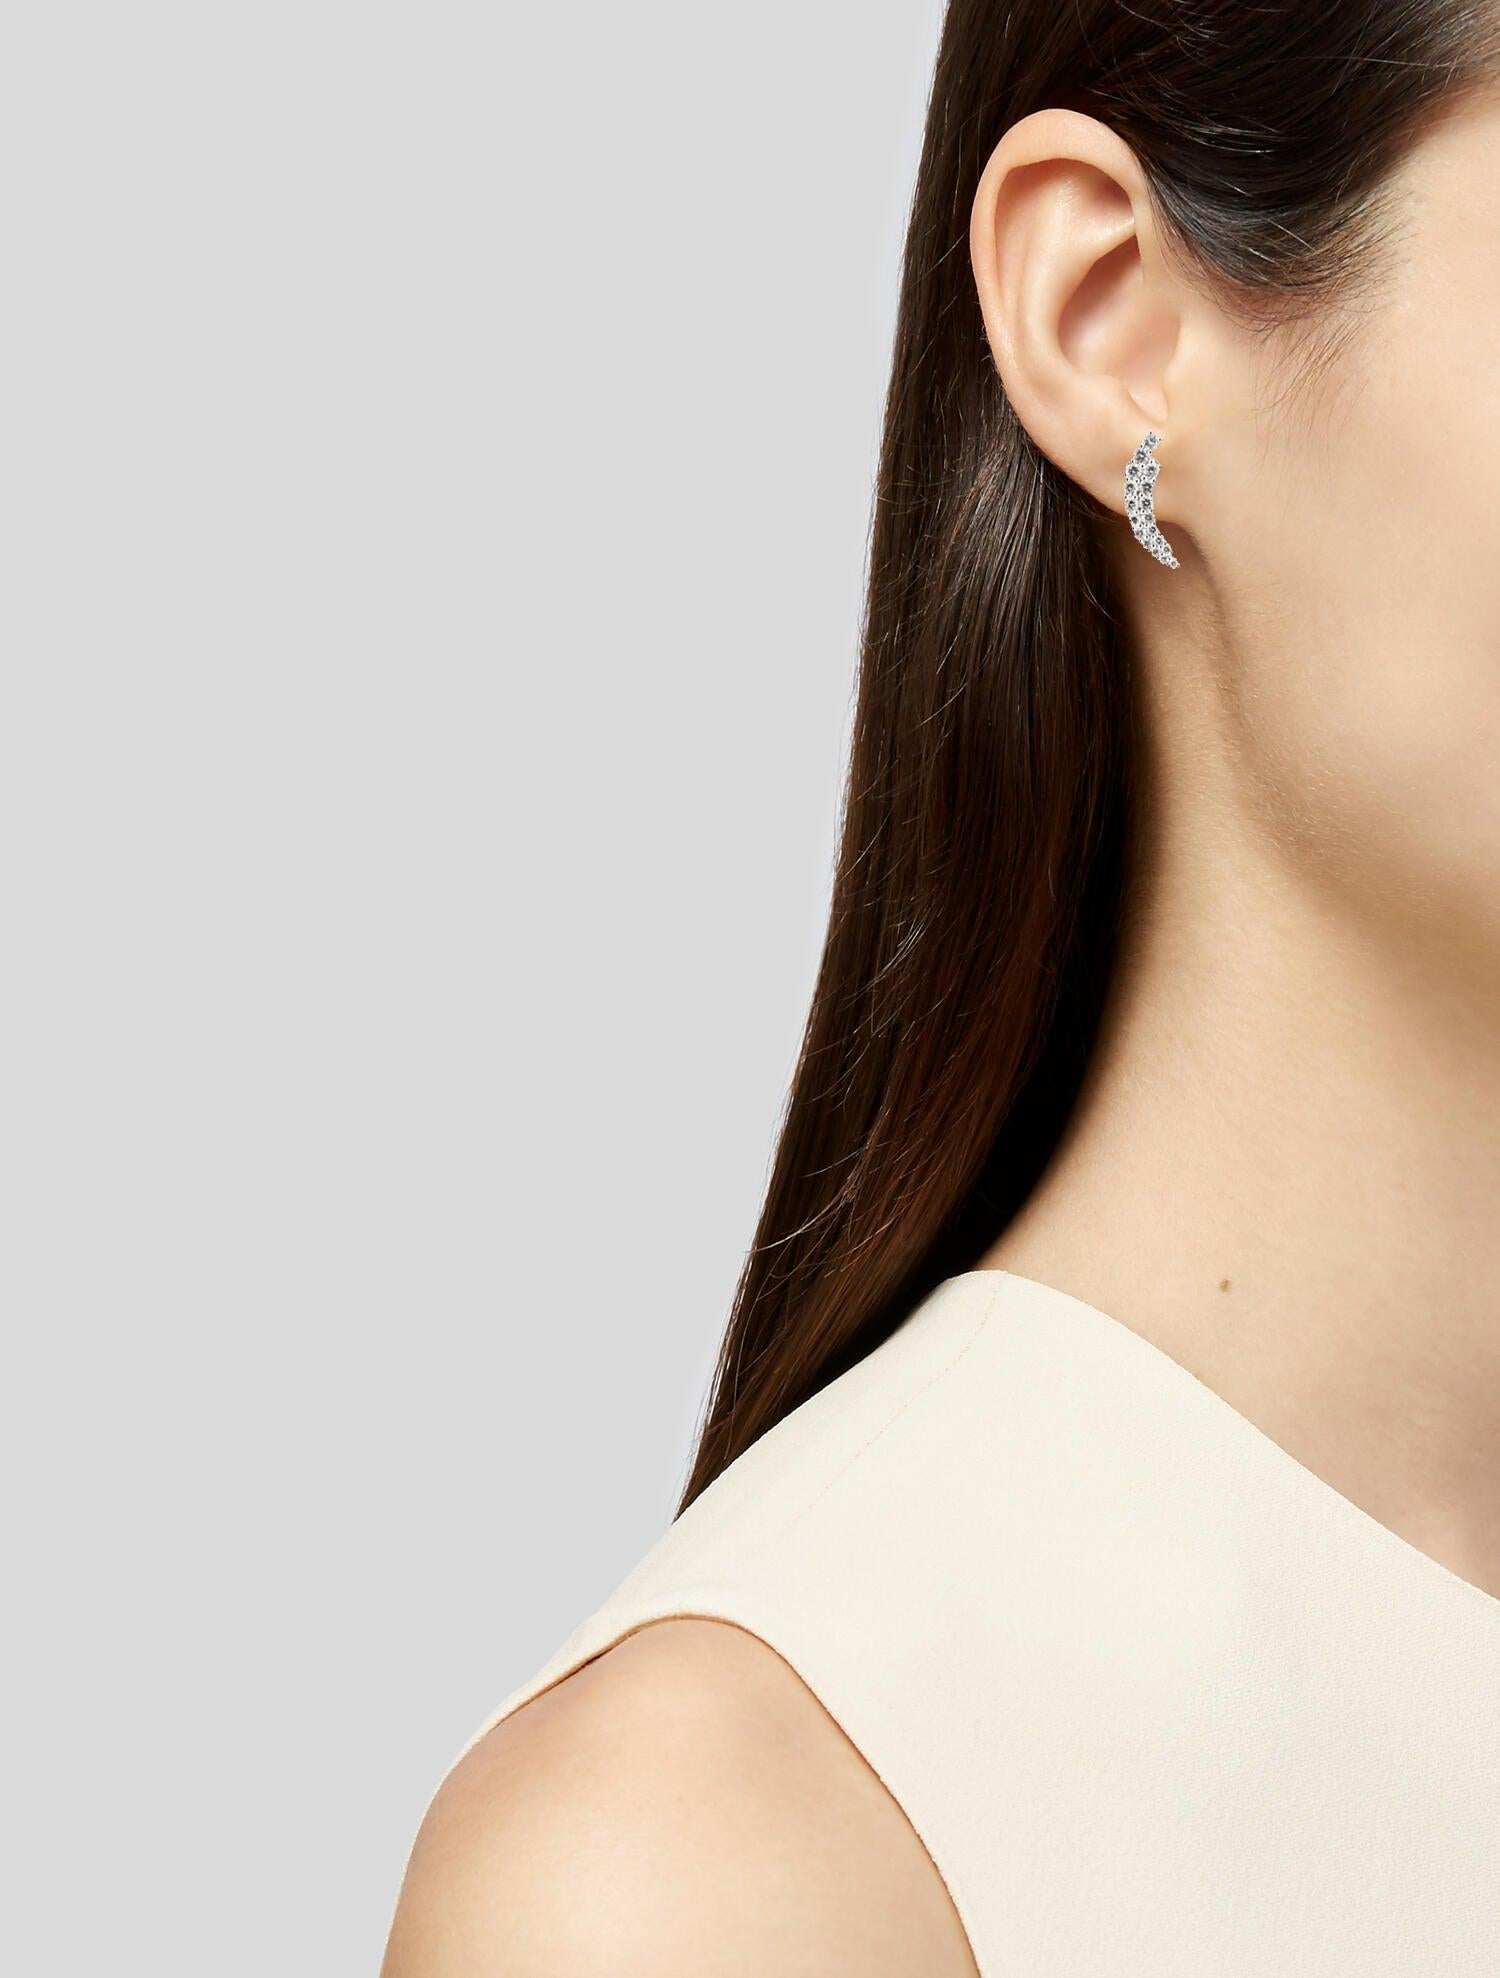 Contemporary 14 Karat White Gold 1.31 Carat Diamond Ear Climber Earrings For Sale